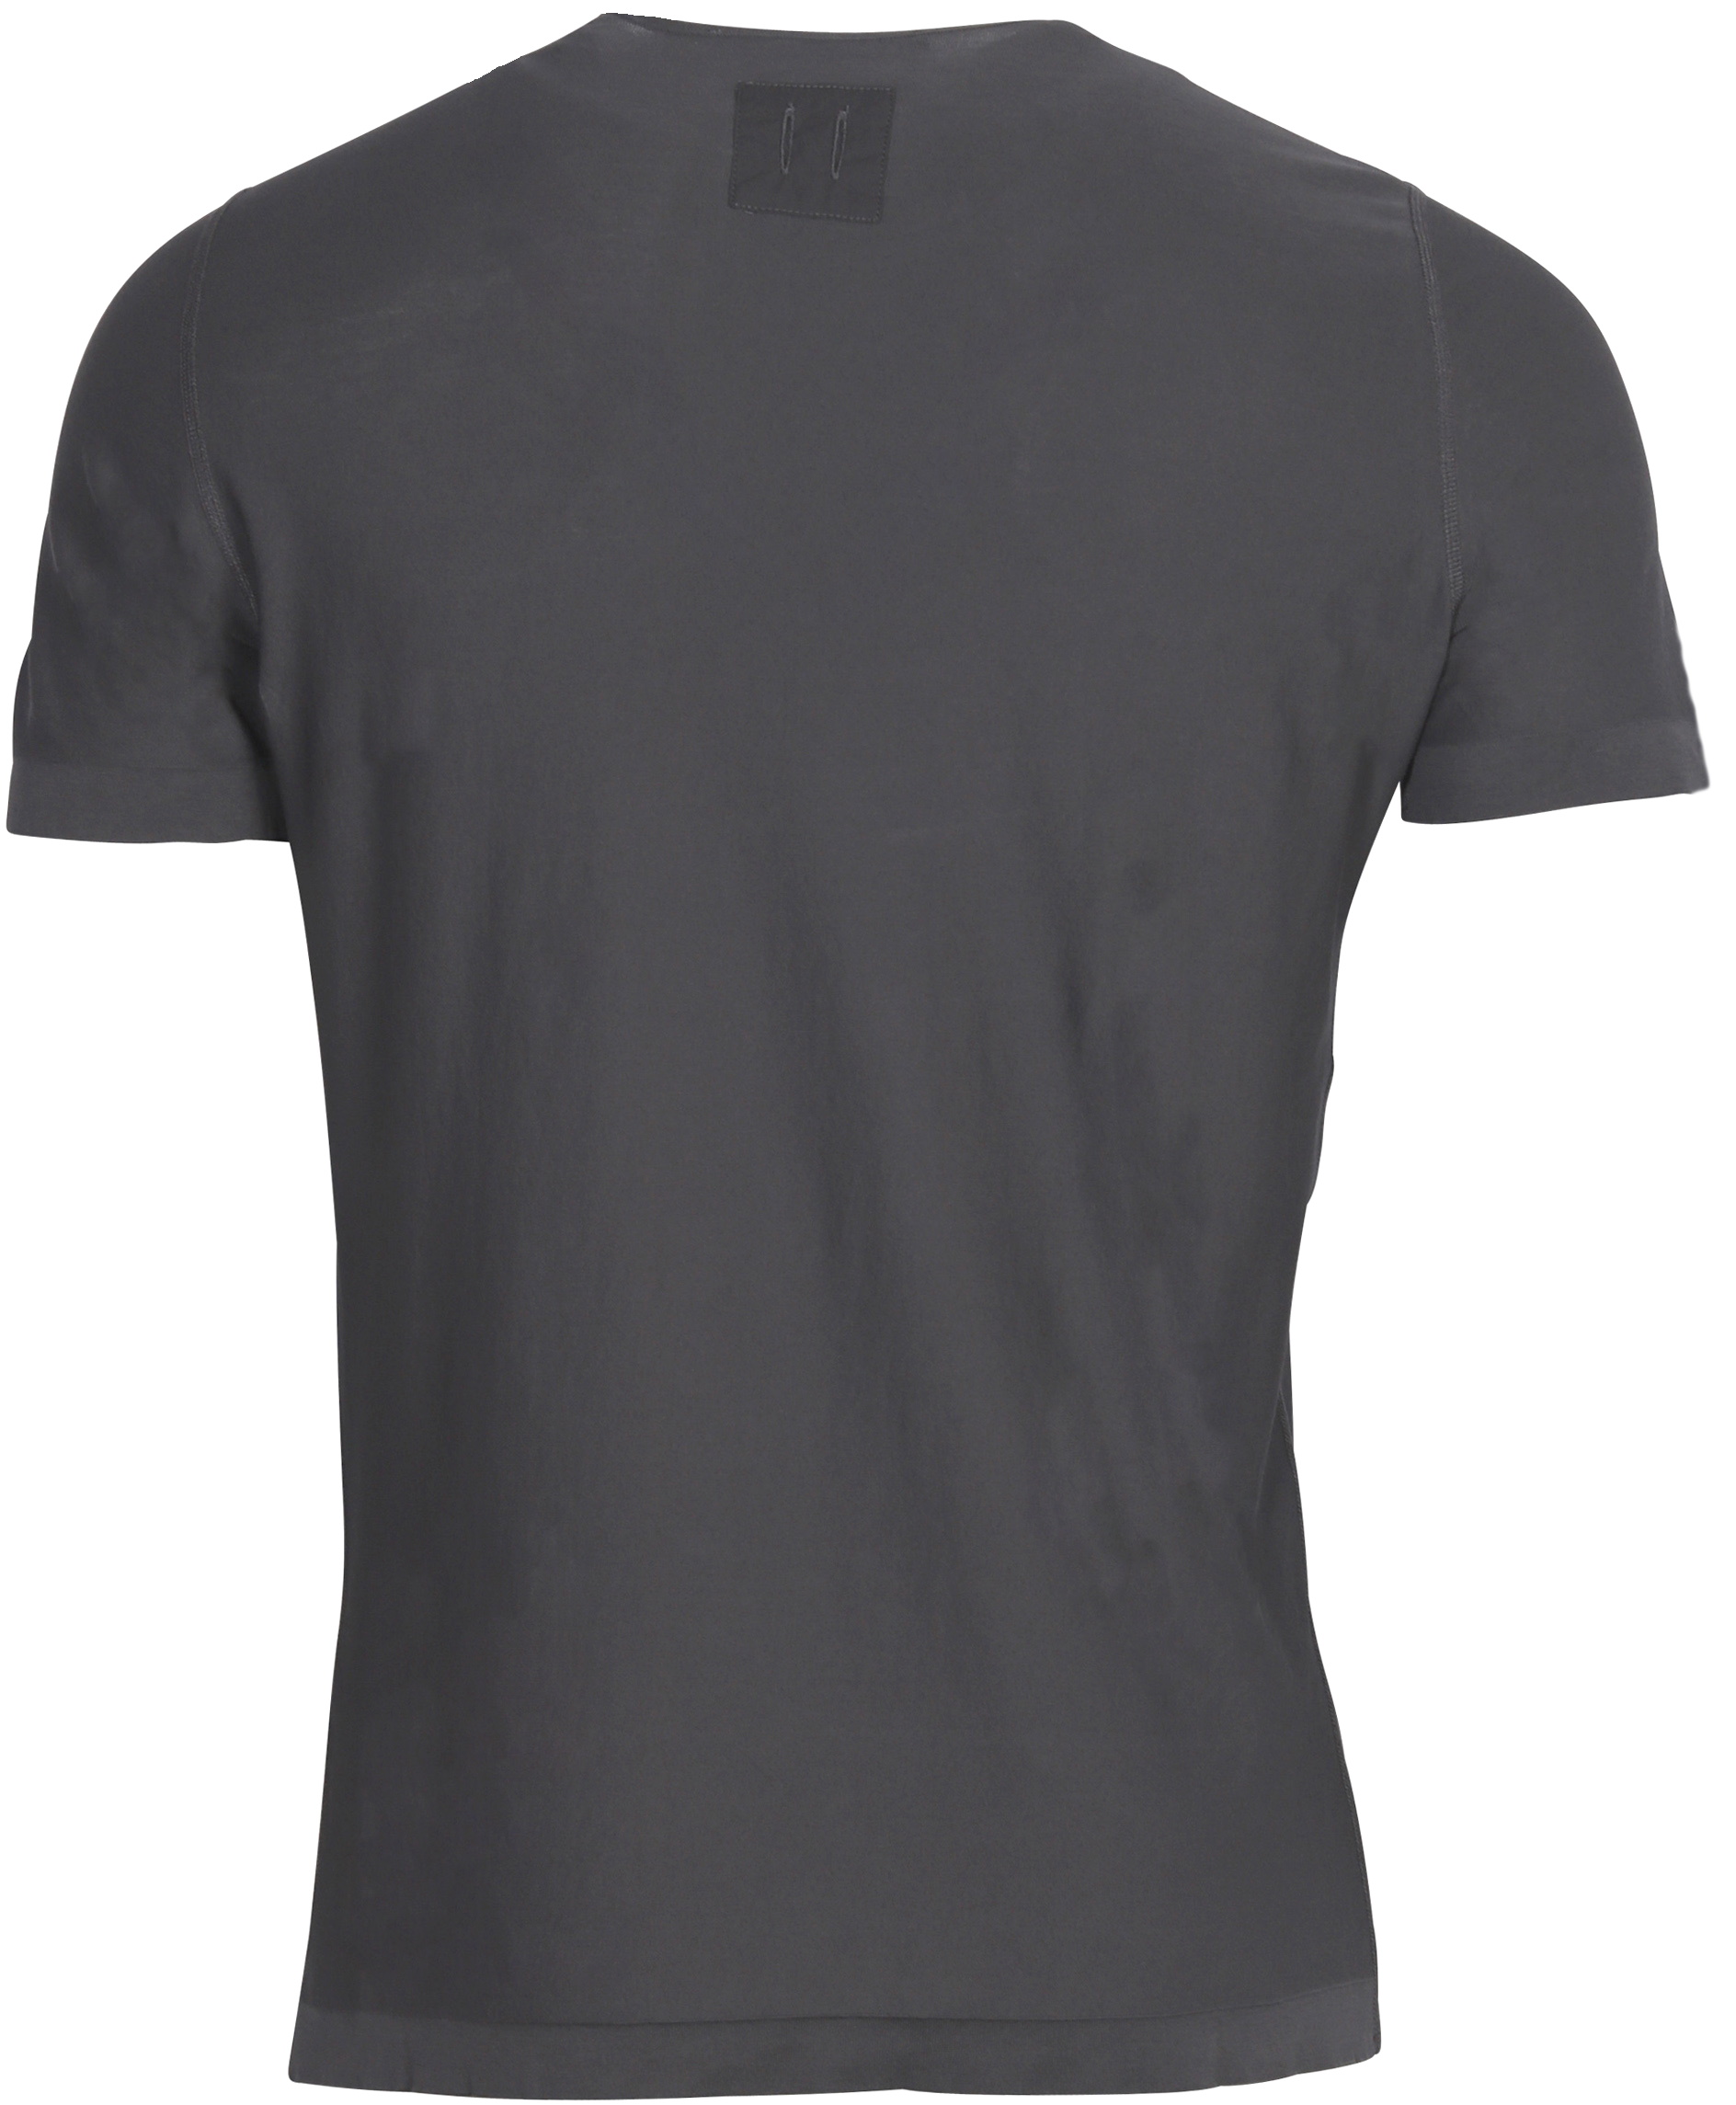 Hannes Roether T-Shirt Dark Grey